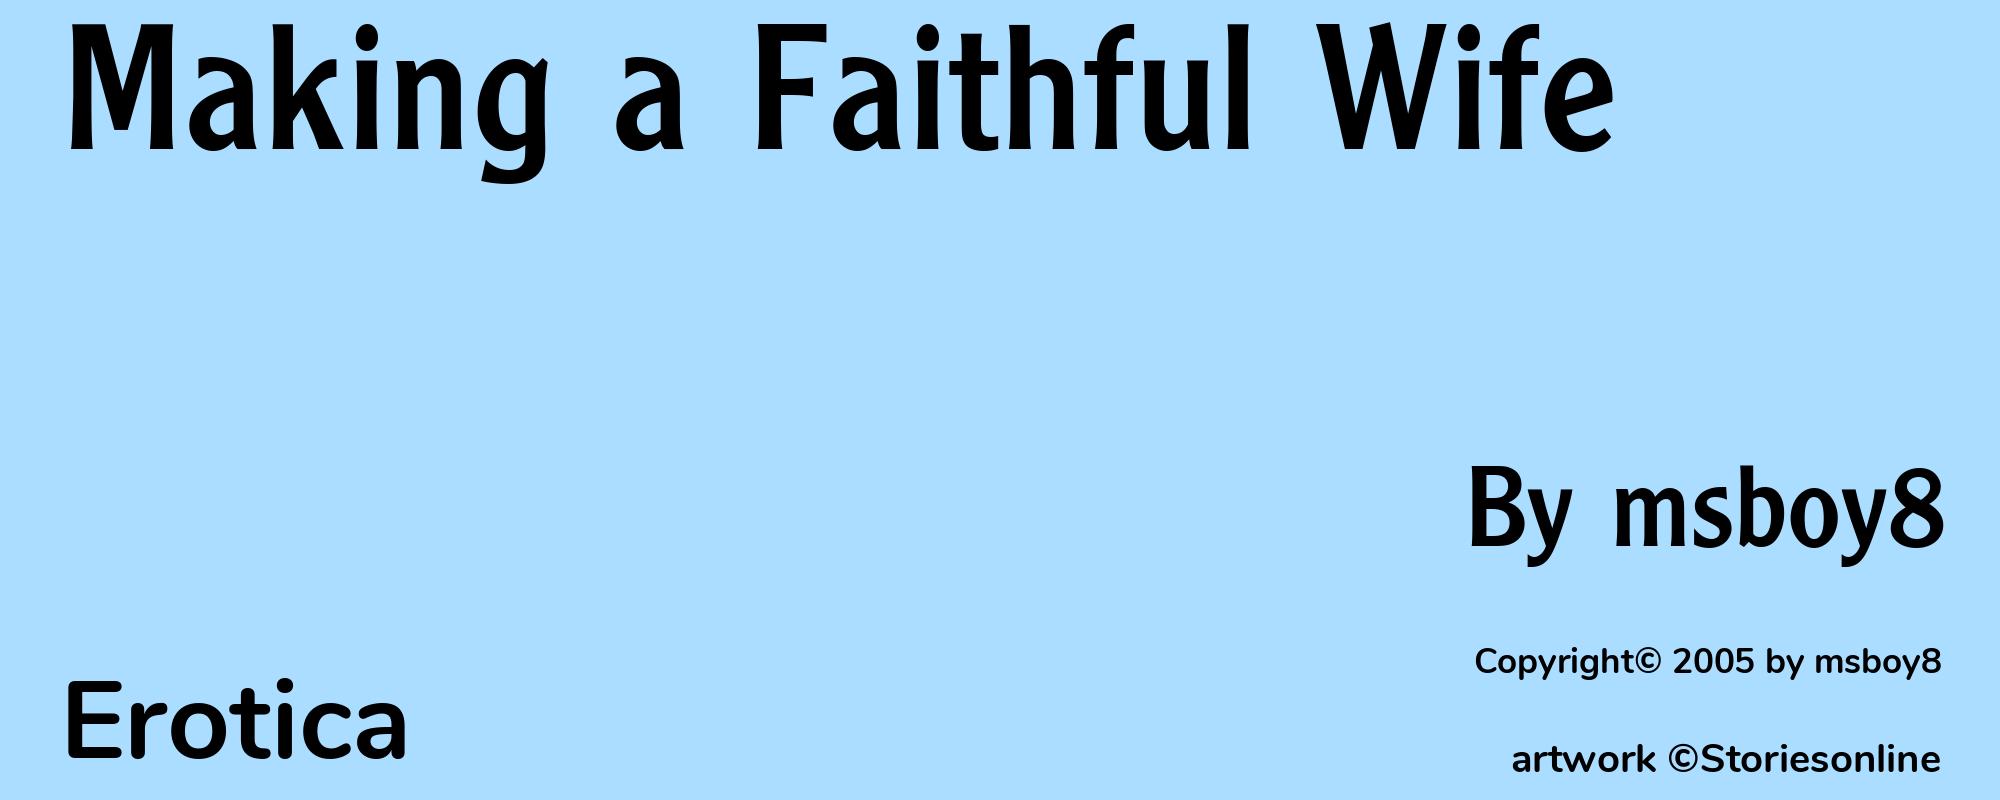 Making a Faithful Wife - Cover